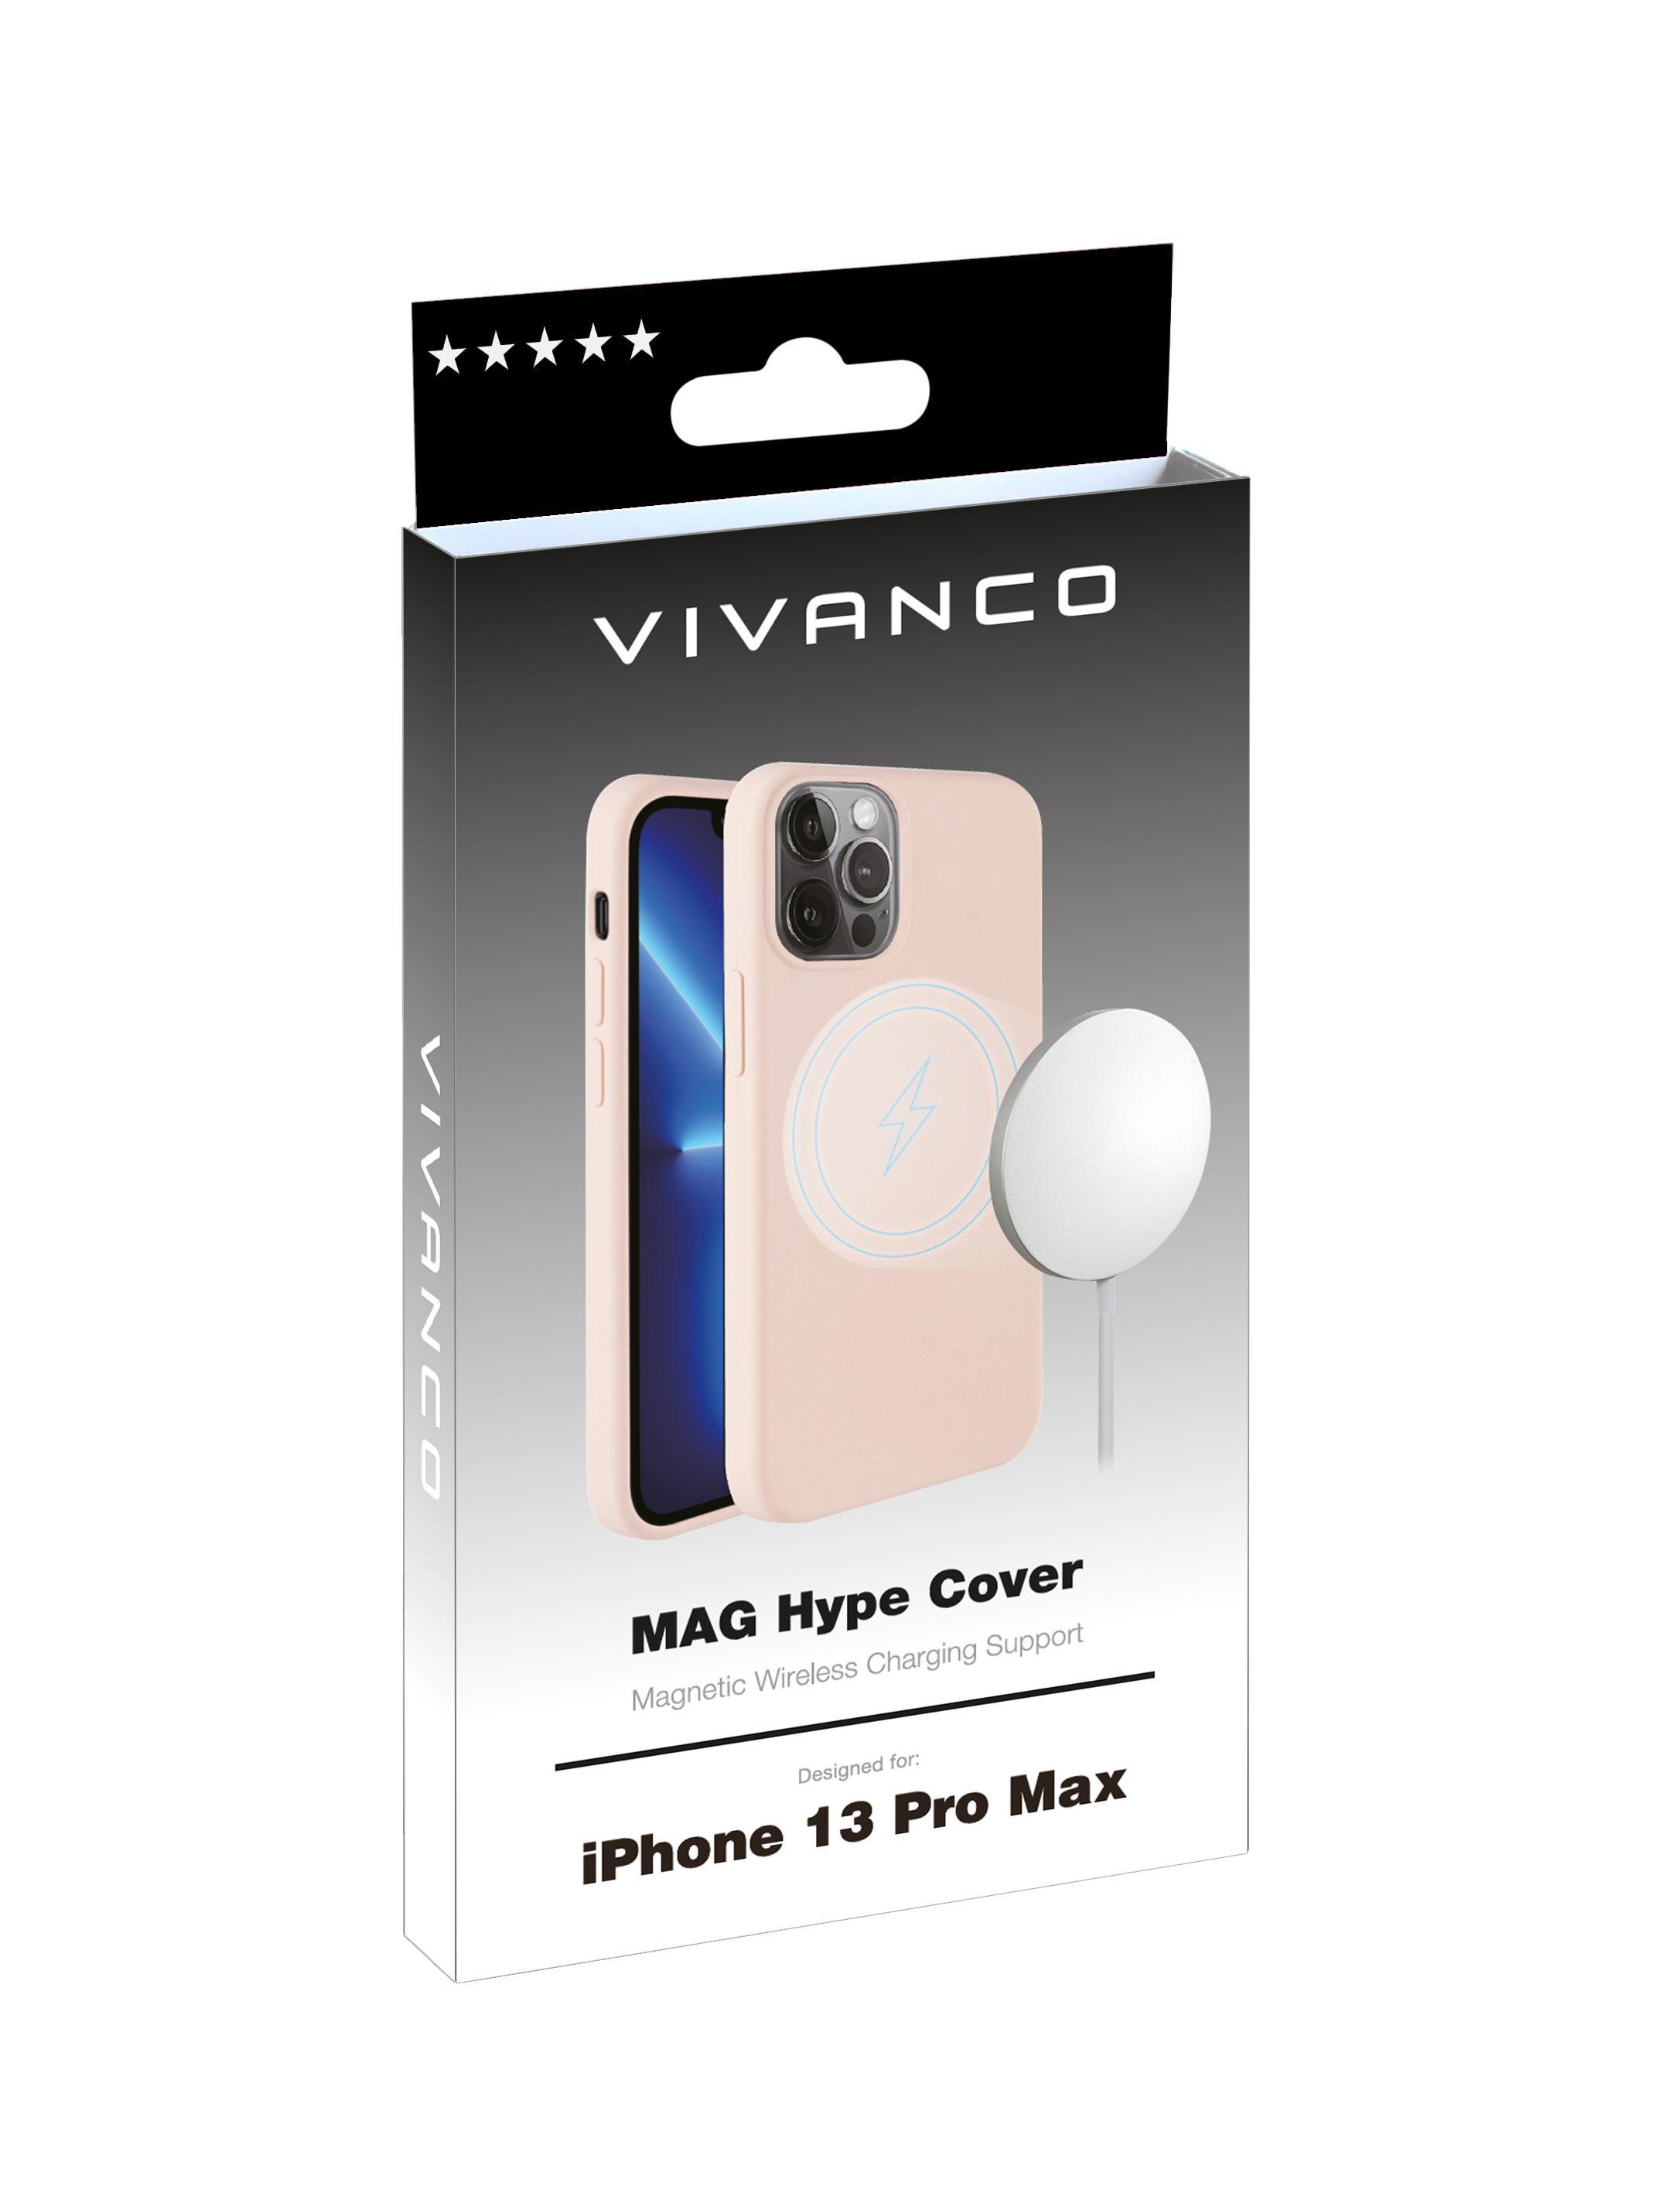 Apple, Rosa Pro Hype, 13 Mag Backcover, Max, VIVANCO iPhone